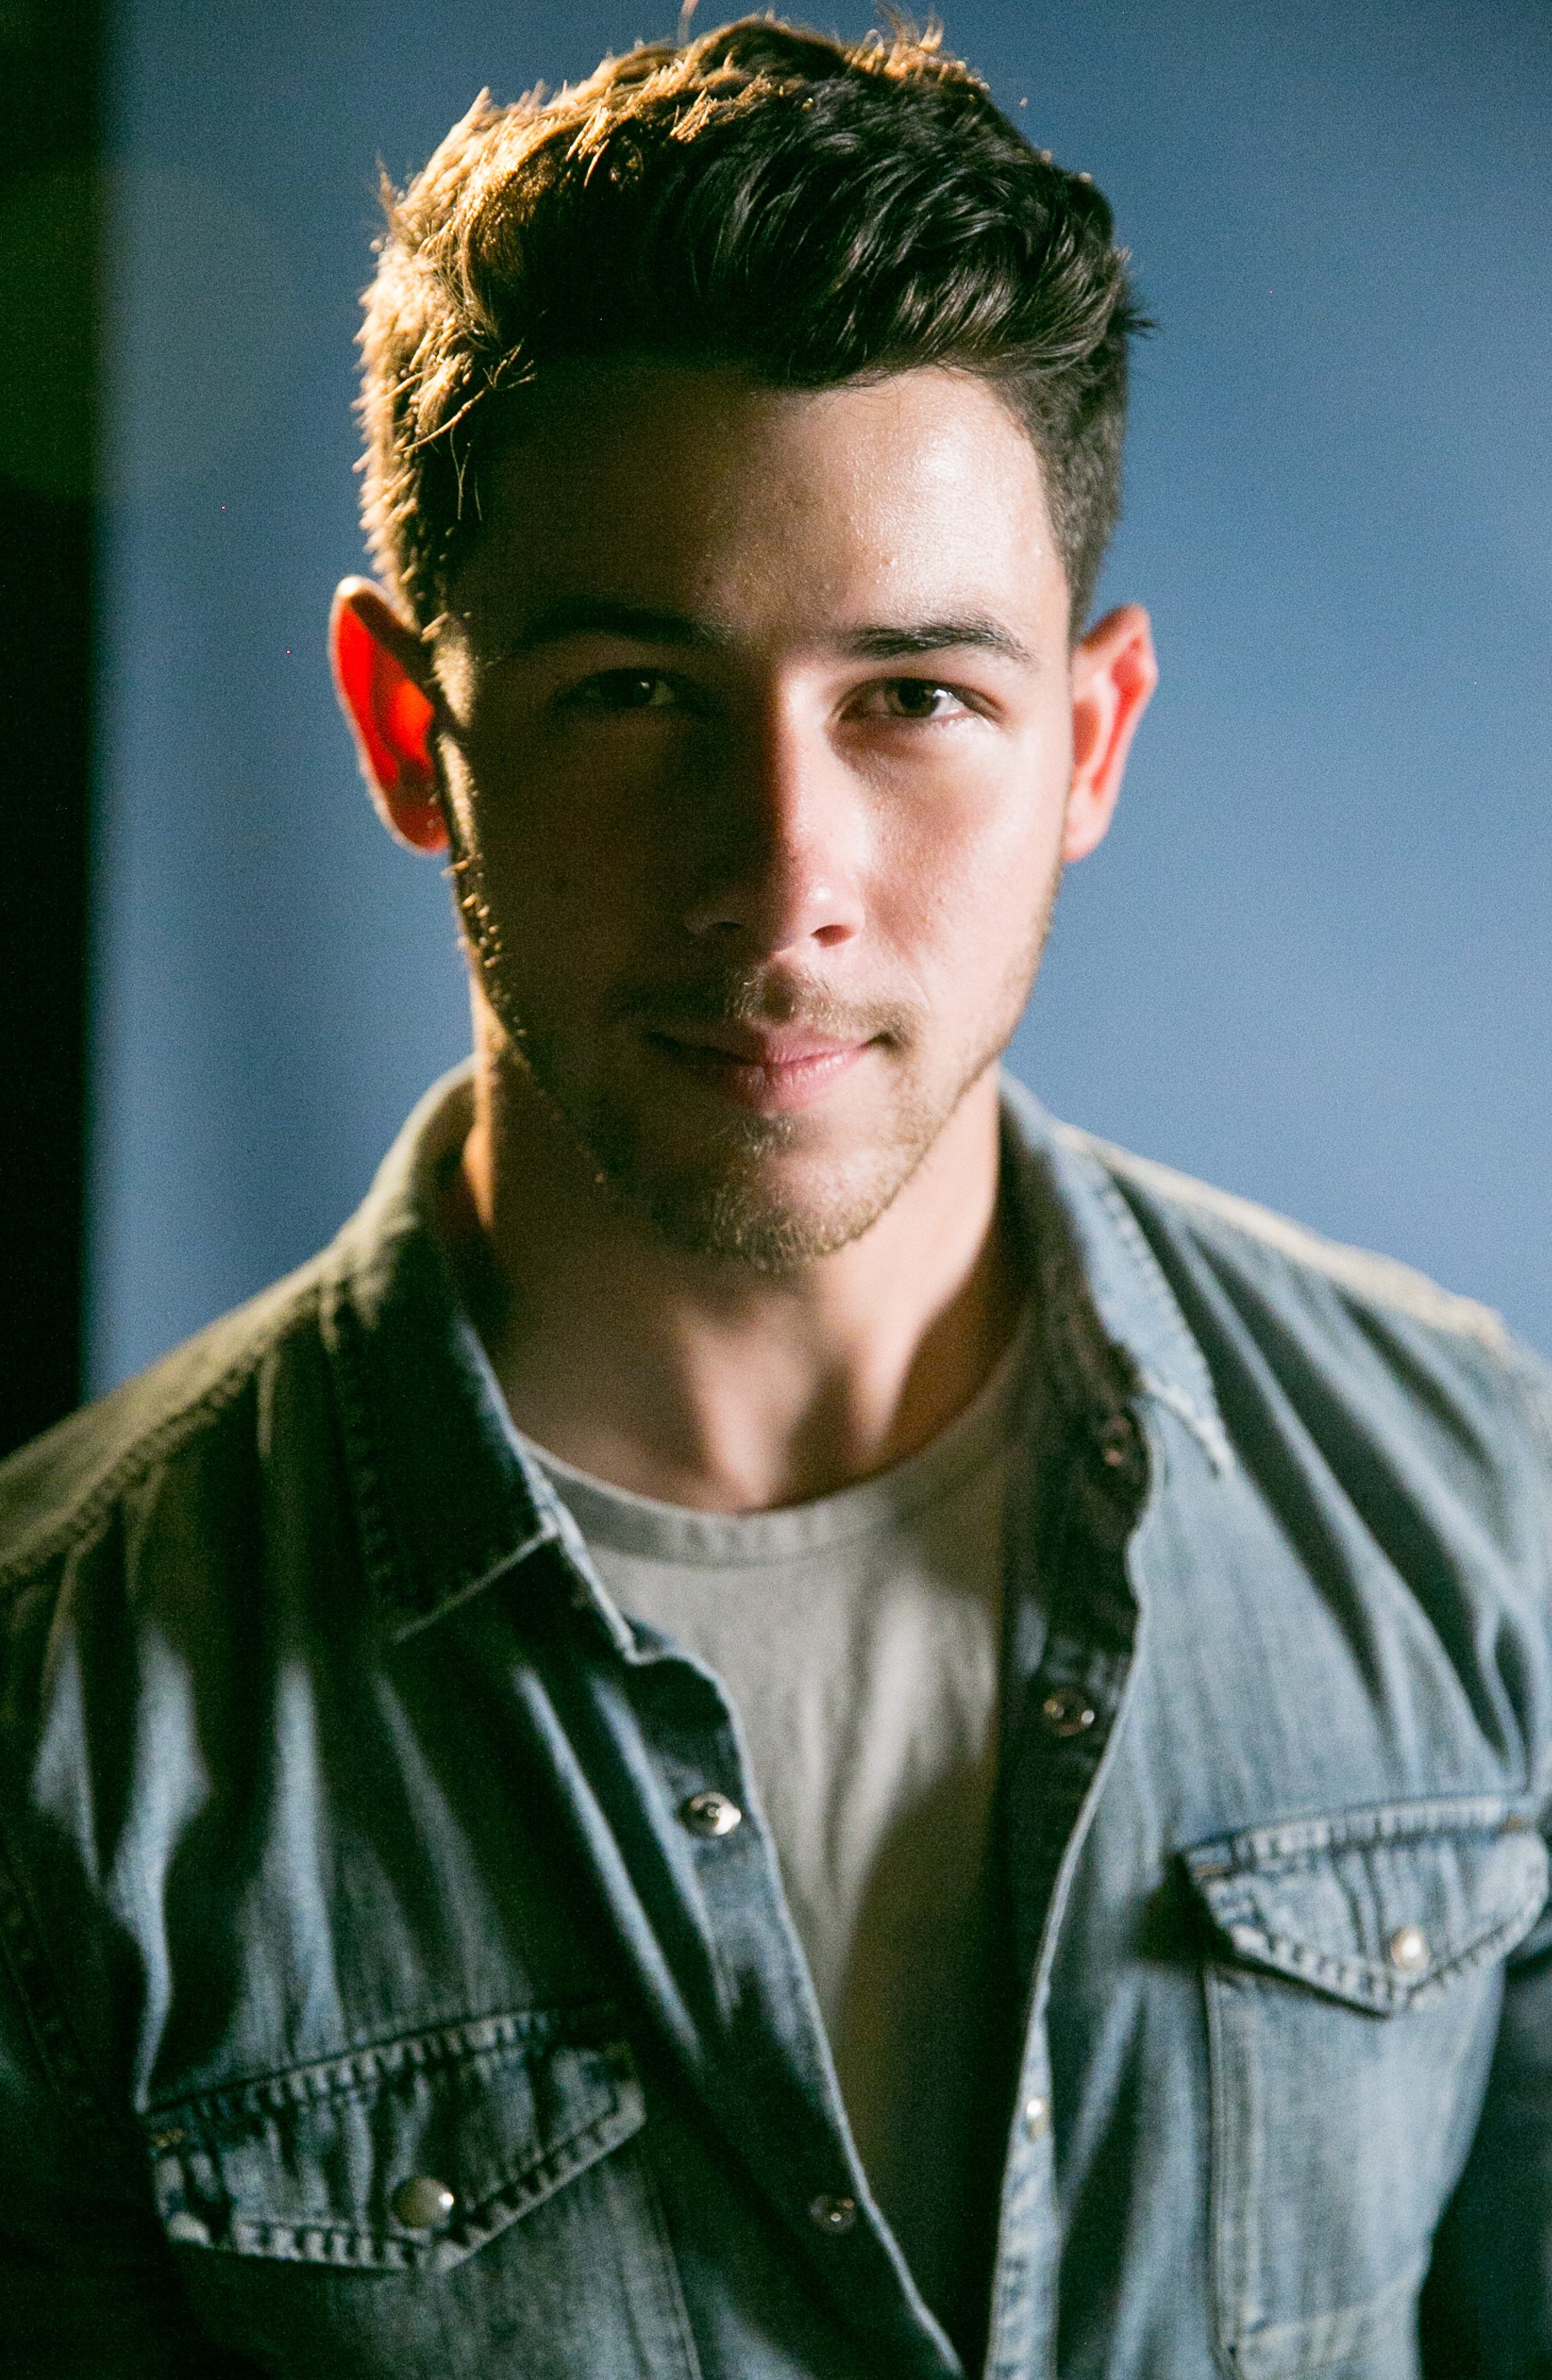 Nick Jonas - American Singer, Composer and Actor
Nick Jonas